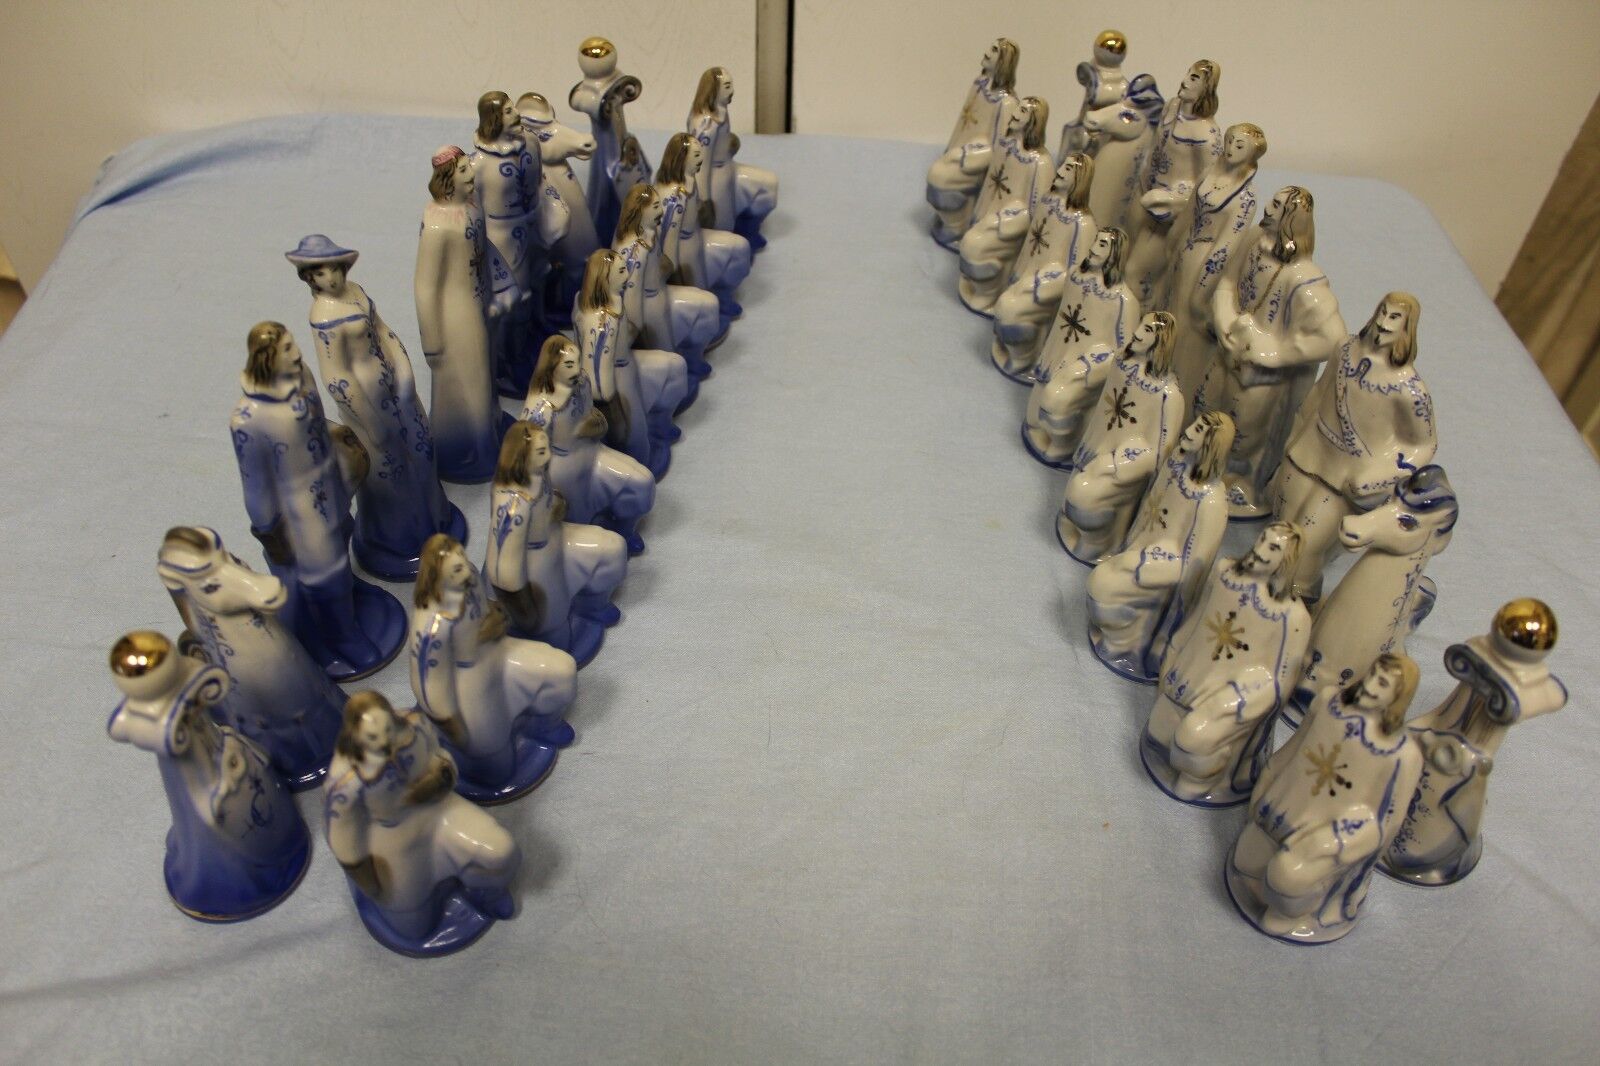 11421.Rare Porcelain Chess Pieces. Collectibles by Gorodnitsa porcelain factory.Ucrane